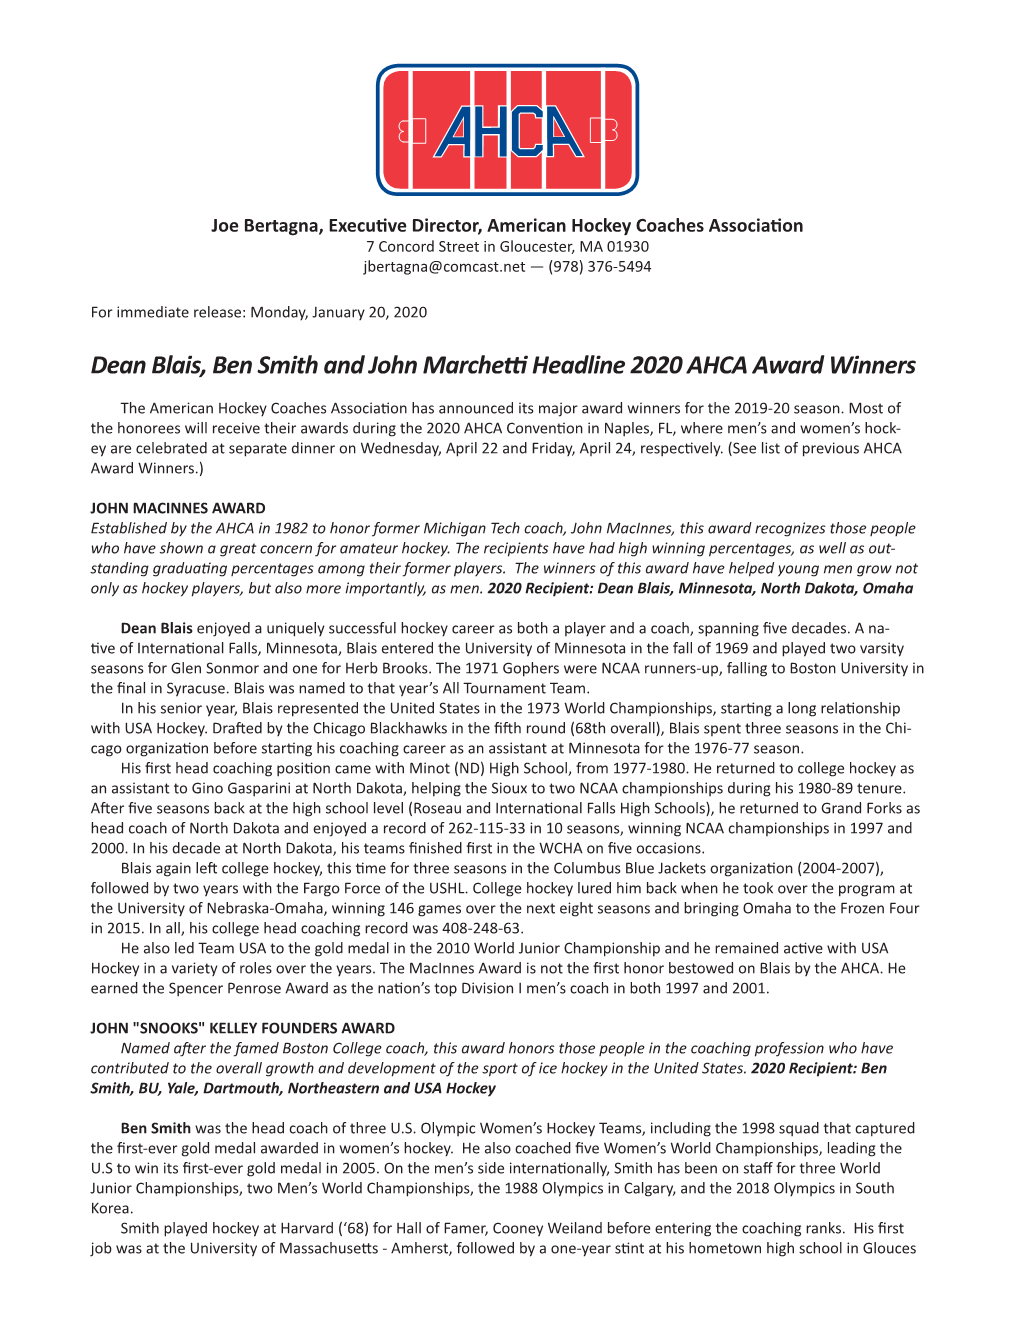 Dean Blais, Ben Smith and John Marchettiheadline 2020 AHCA Award Winners